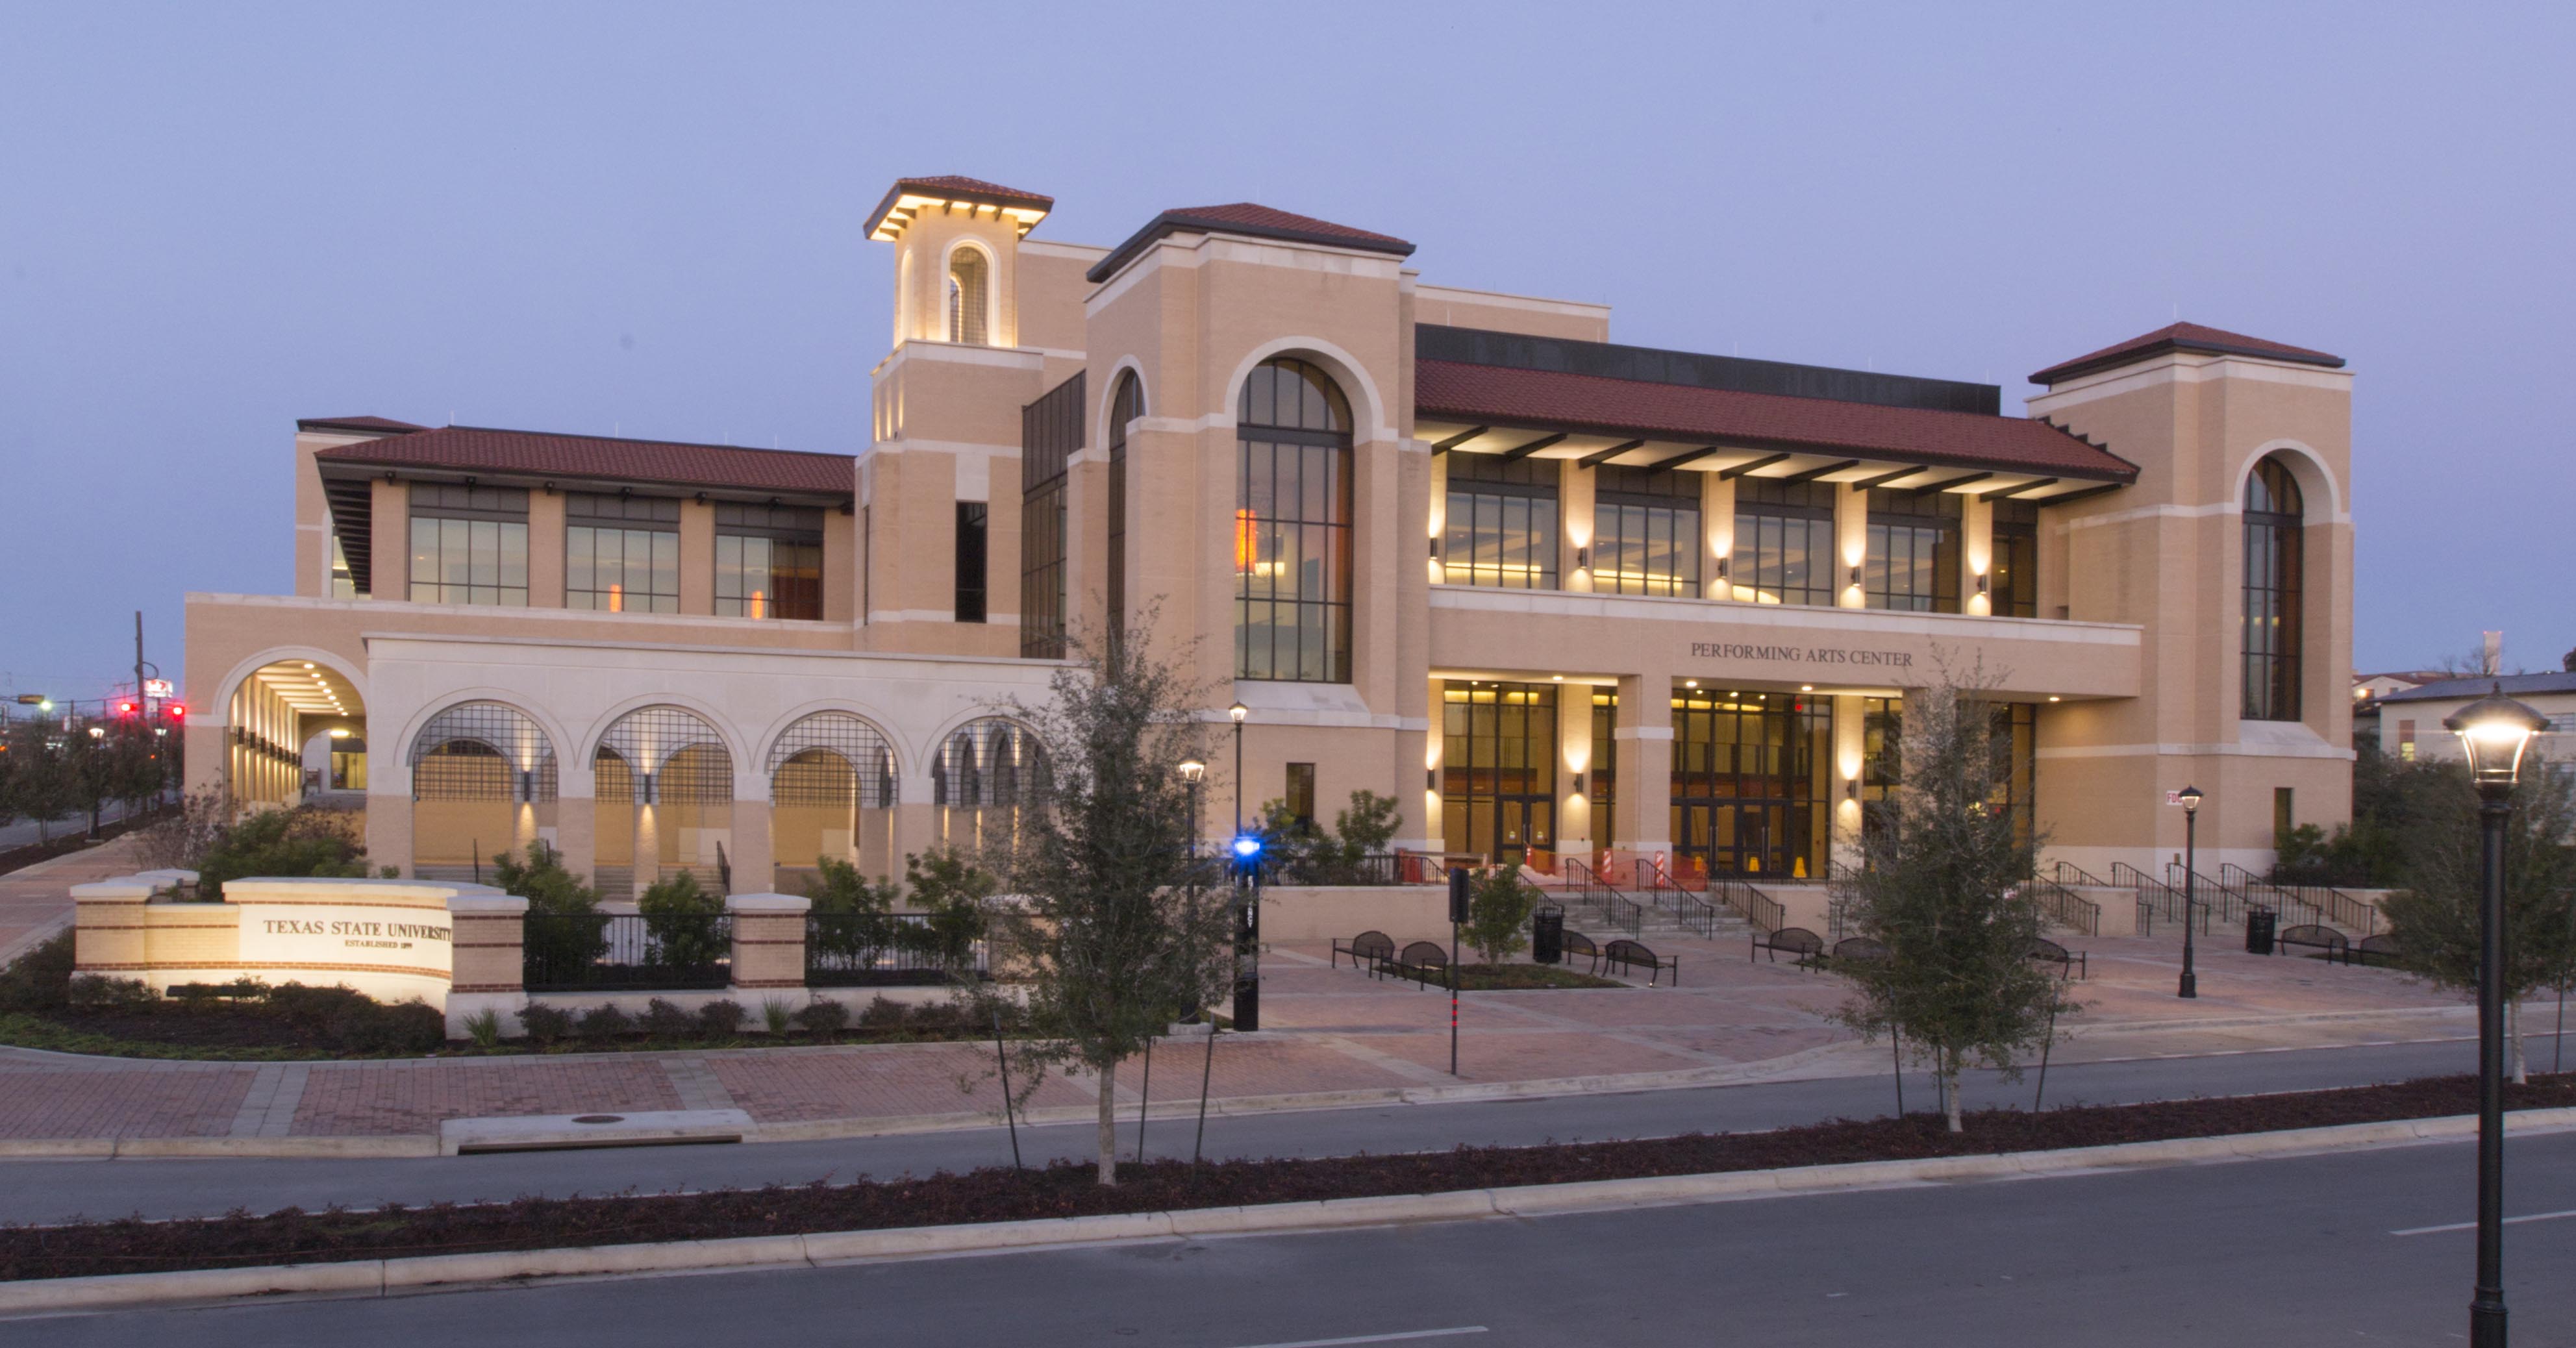 Performing Arts Center at Texas State University at Night